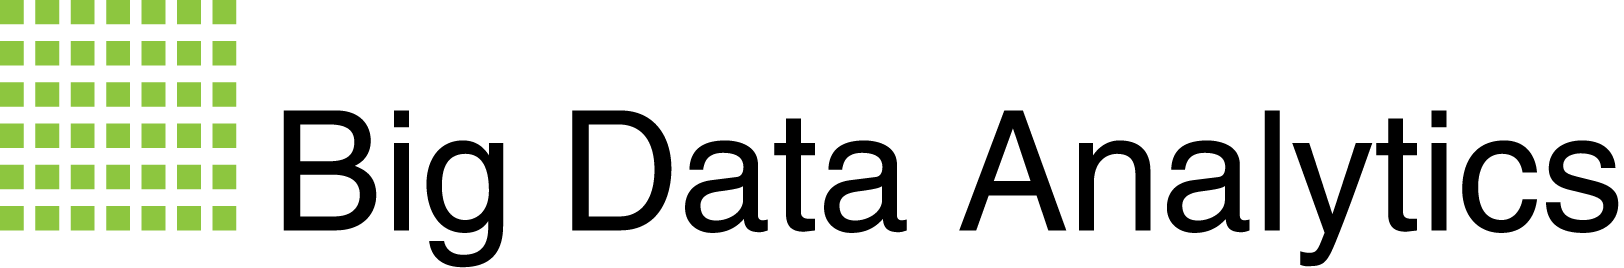 big-data-analytics-logo